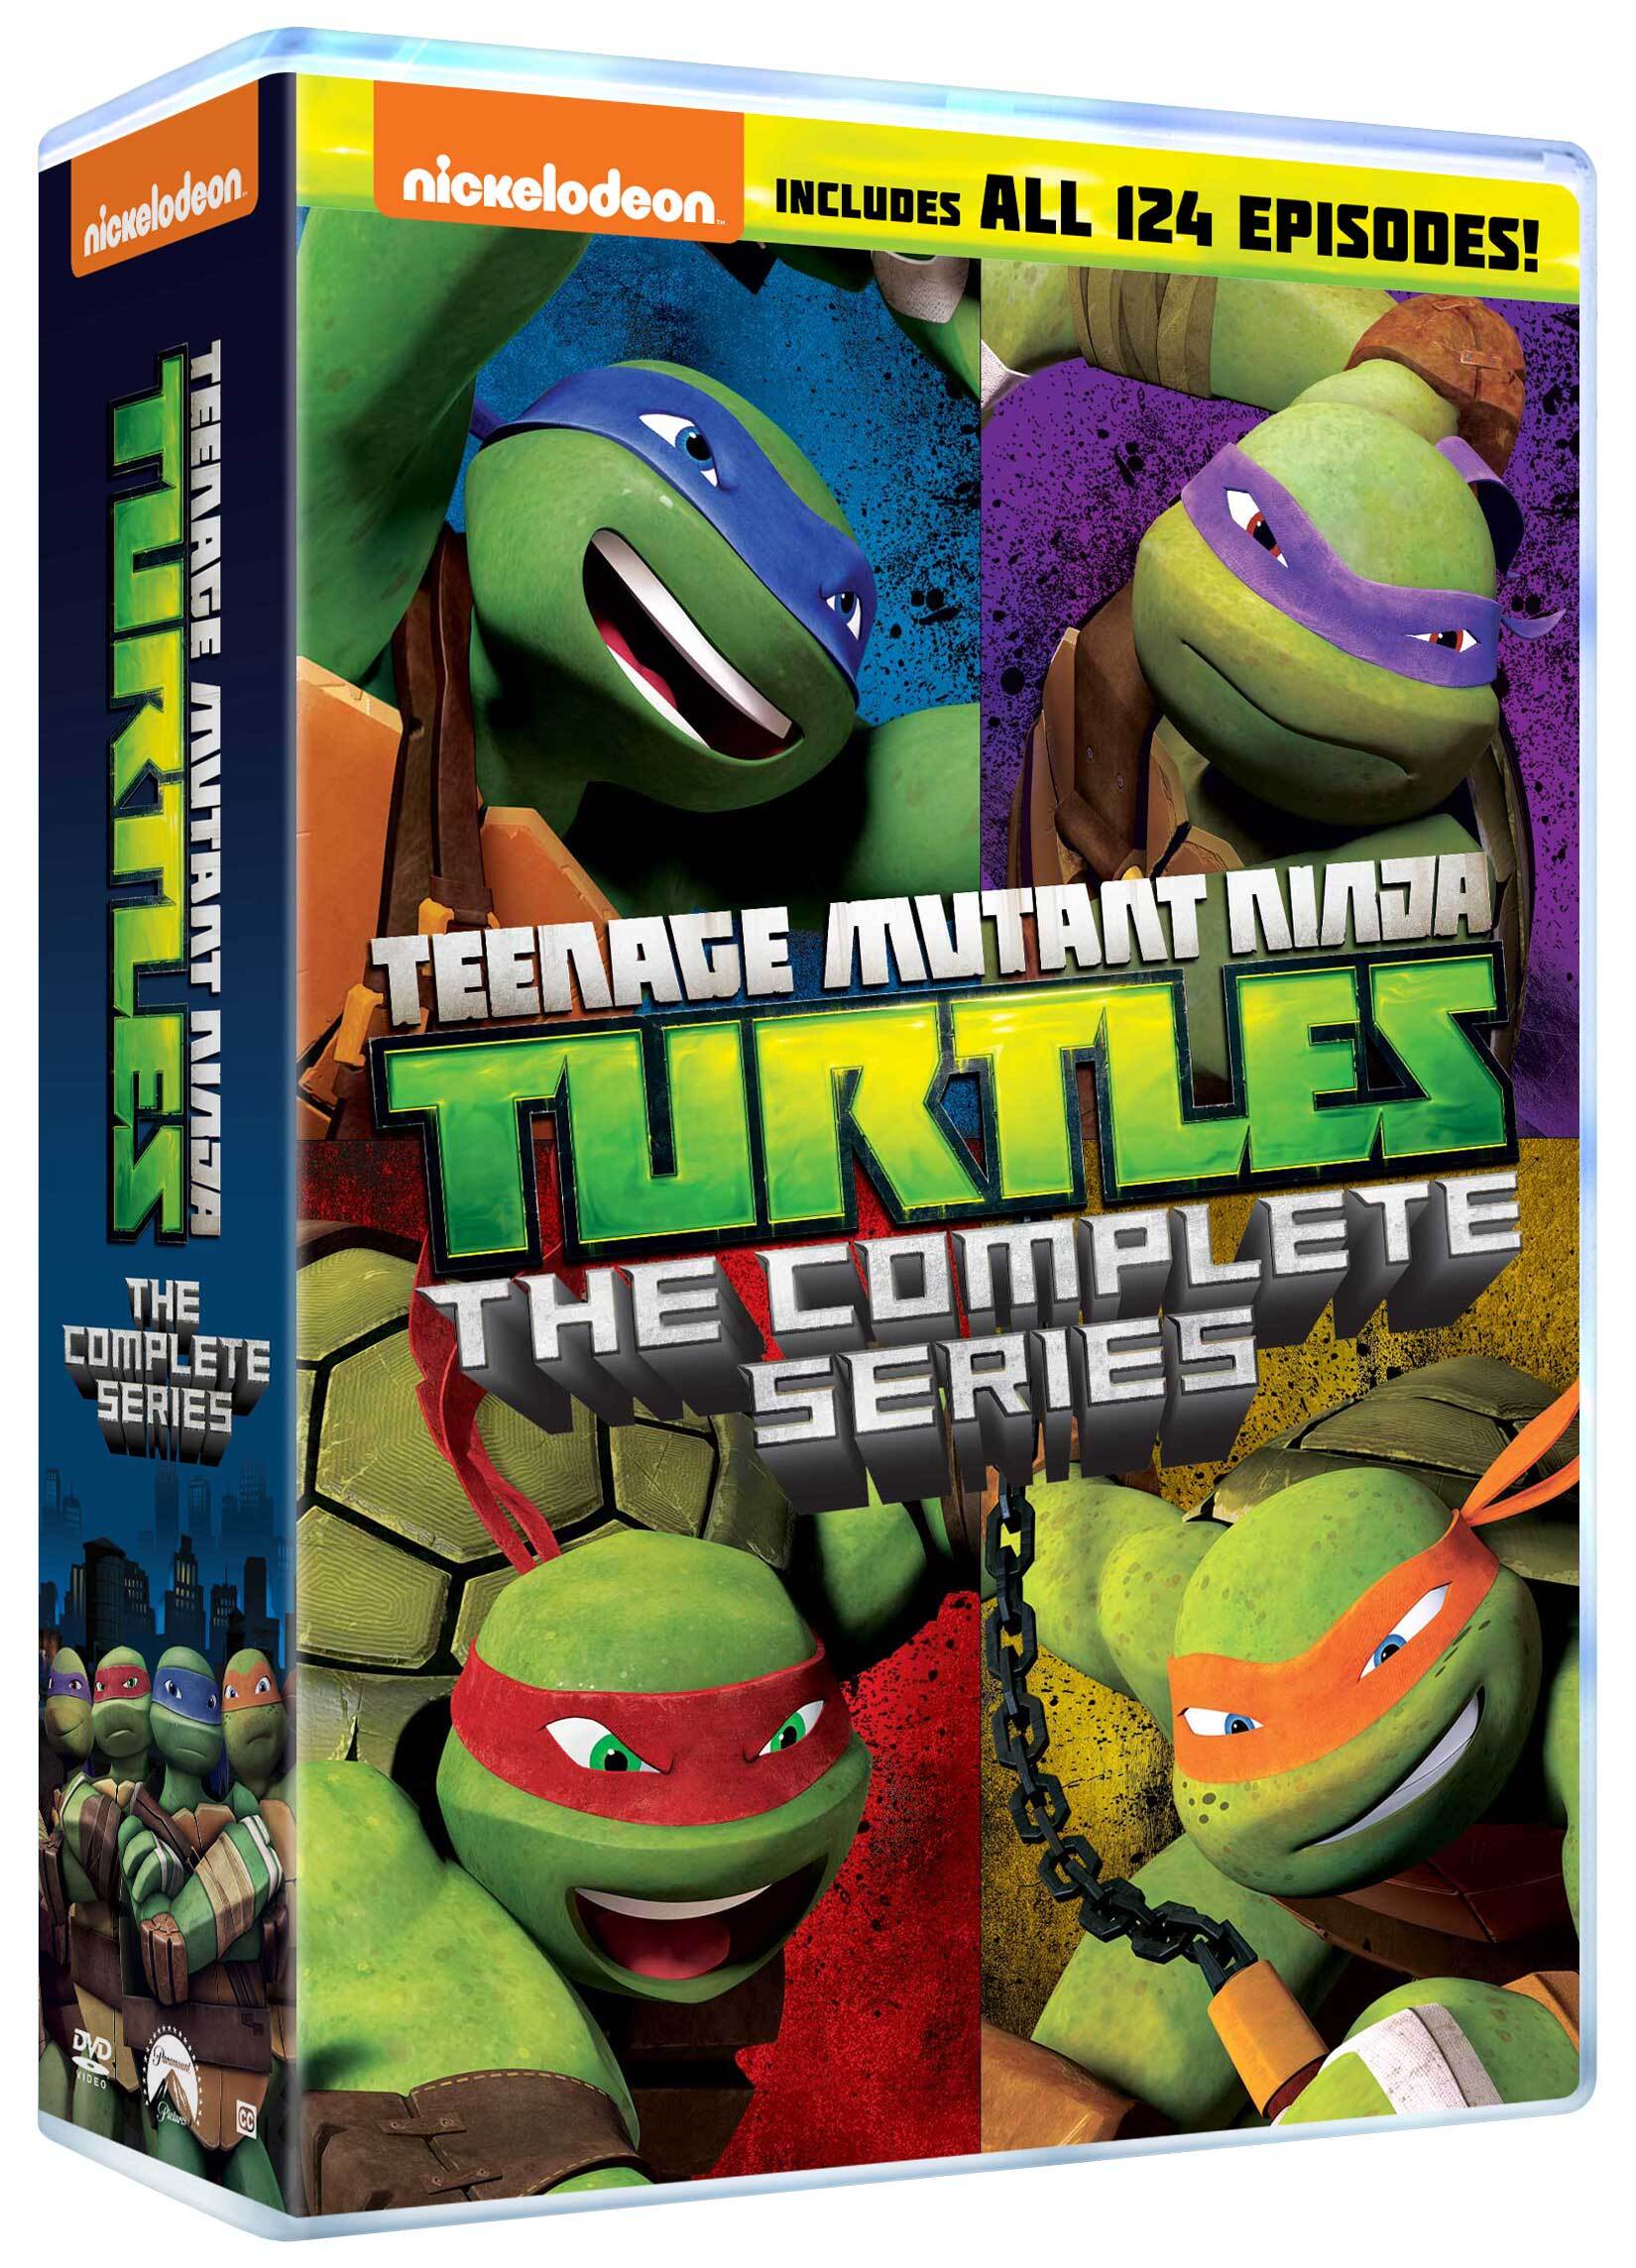 Enter to Win Teenage Mutant Ninja Turtles Complete Series DVD